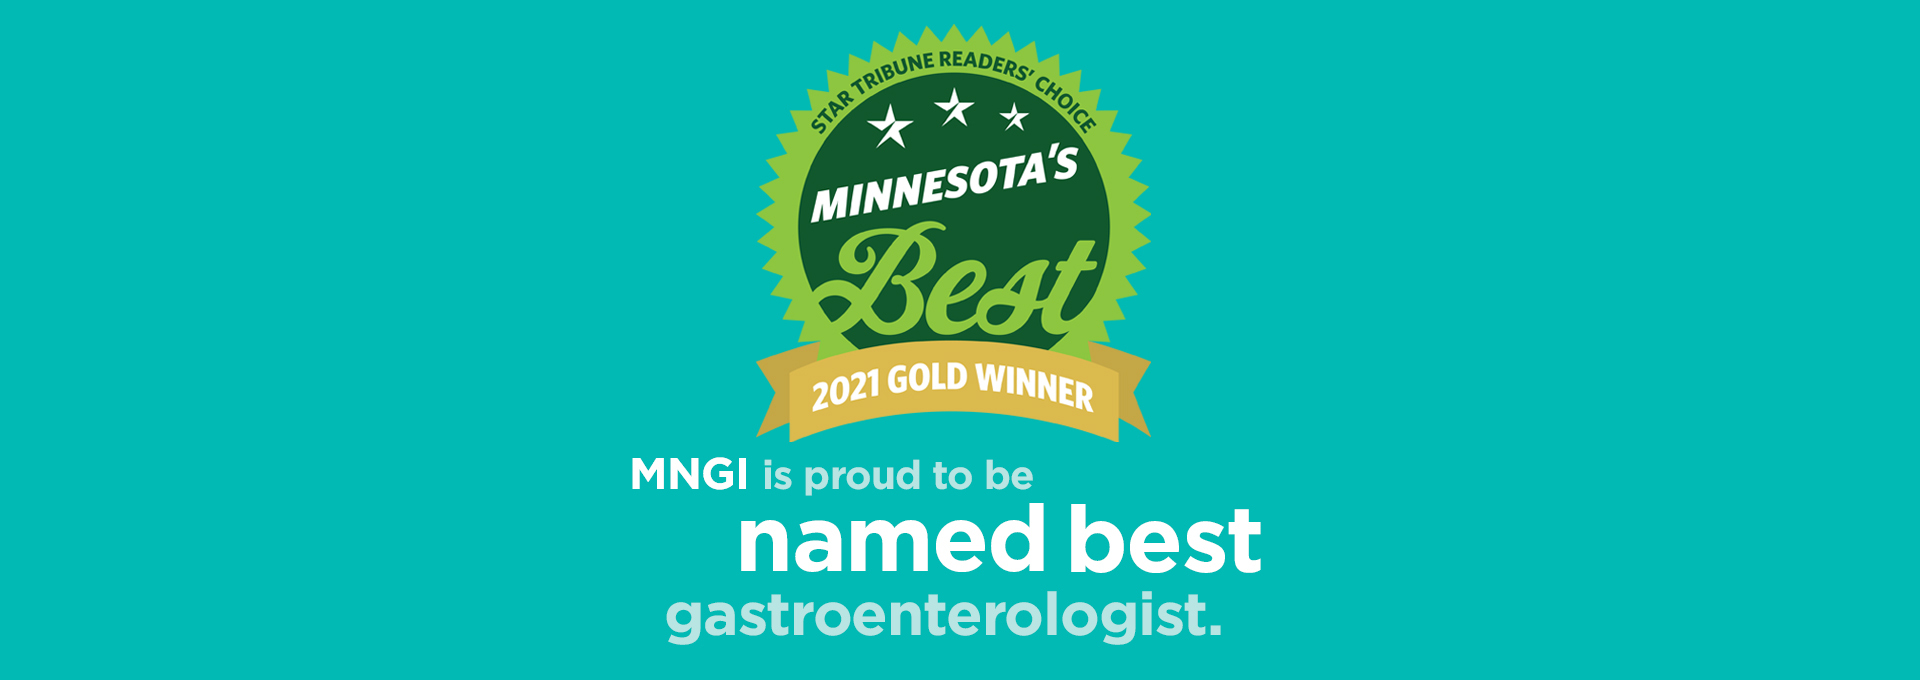 Thanks for voting MNGI best gastroenterologist